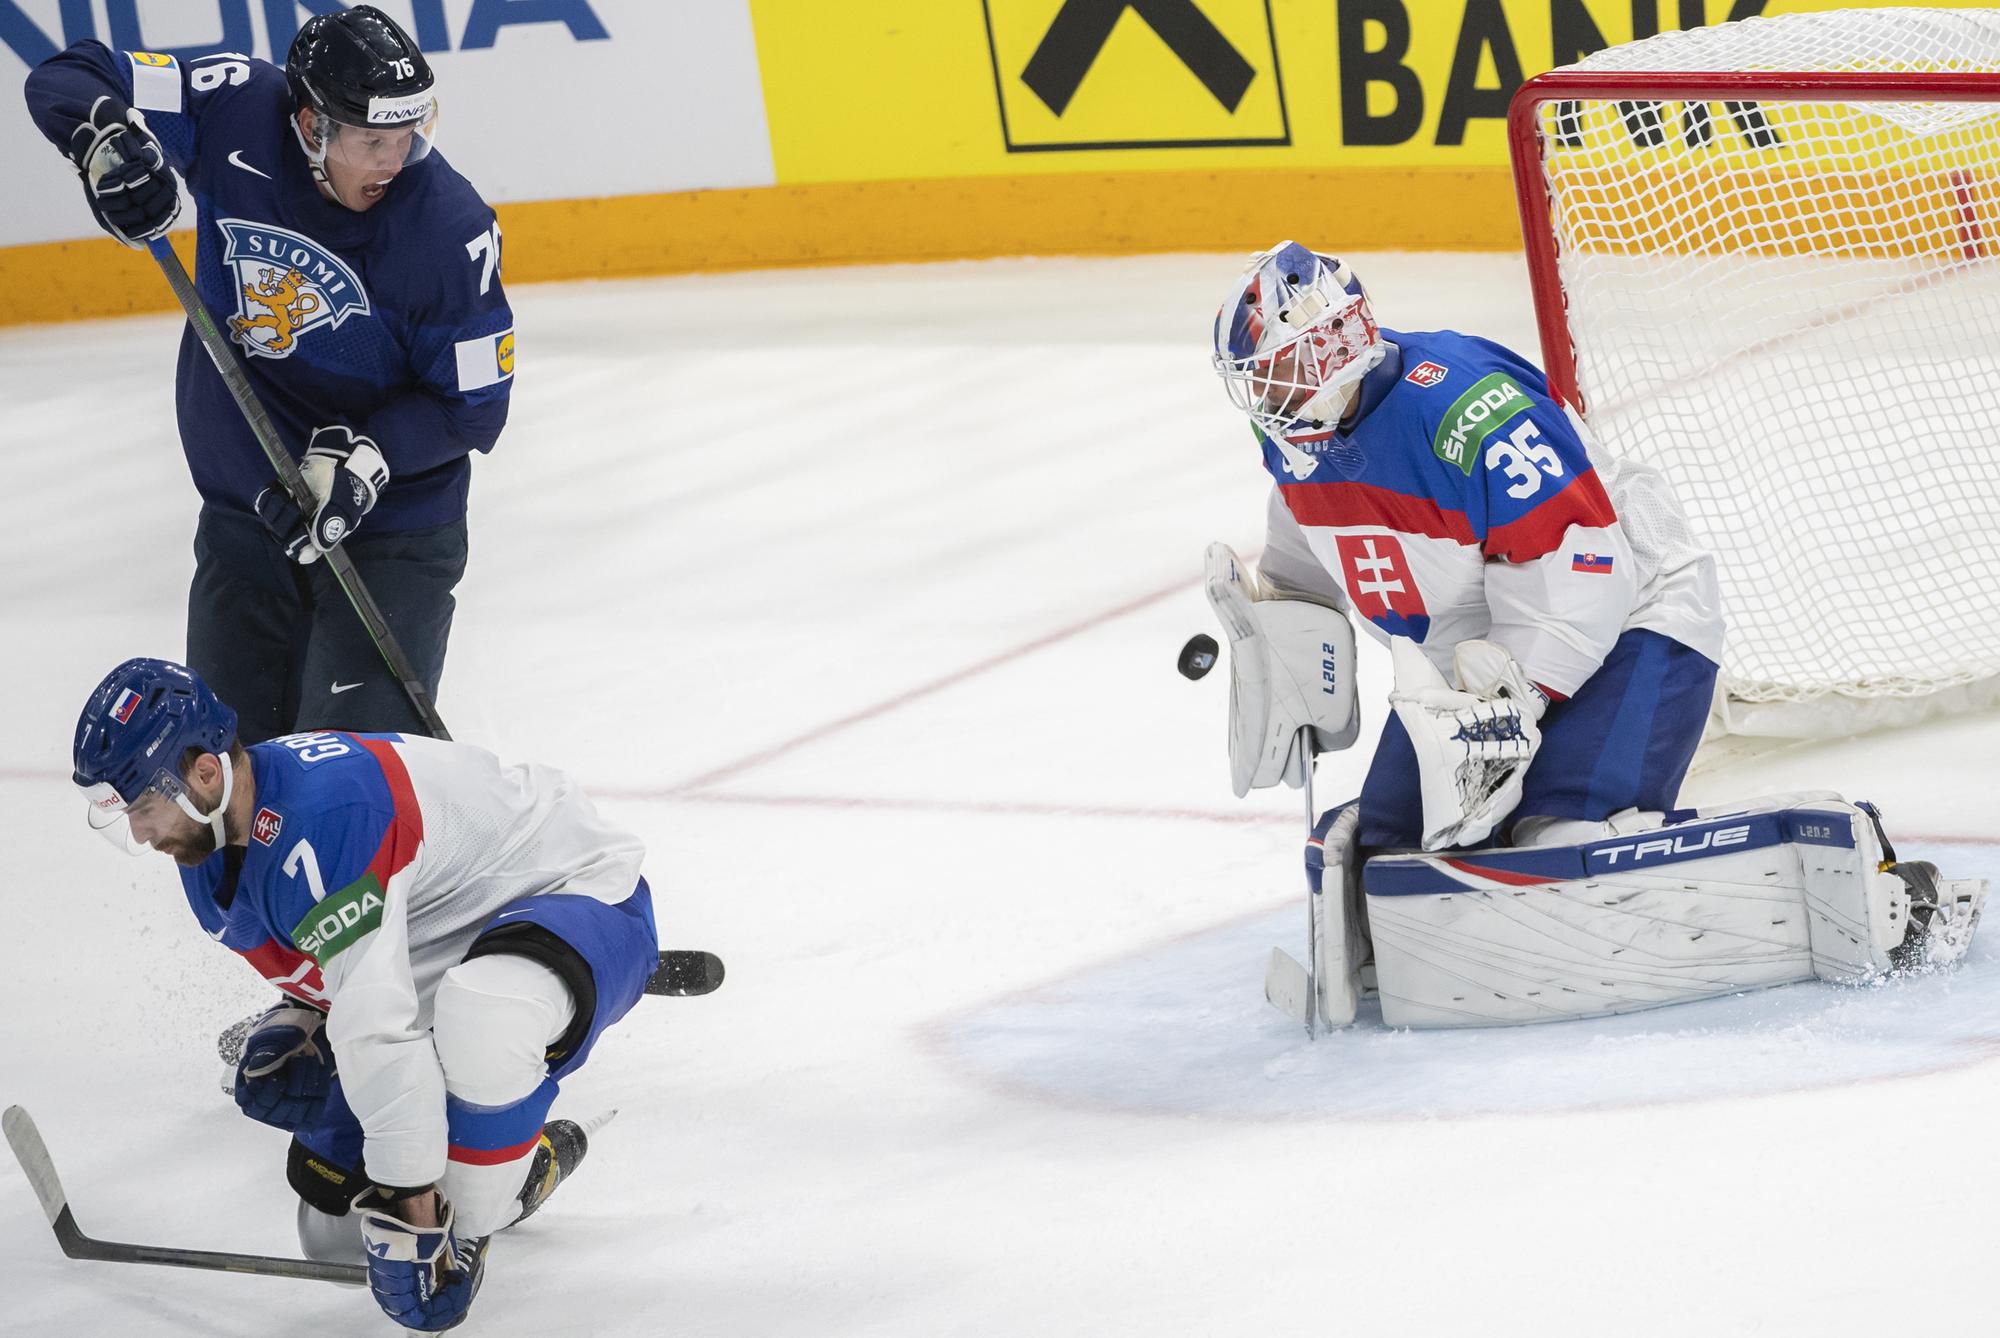 MS v hokeji 2022: Slovensko - Fínsko (Mário Grman, Jere Sallinen, Adam Húska)